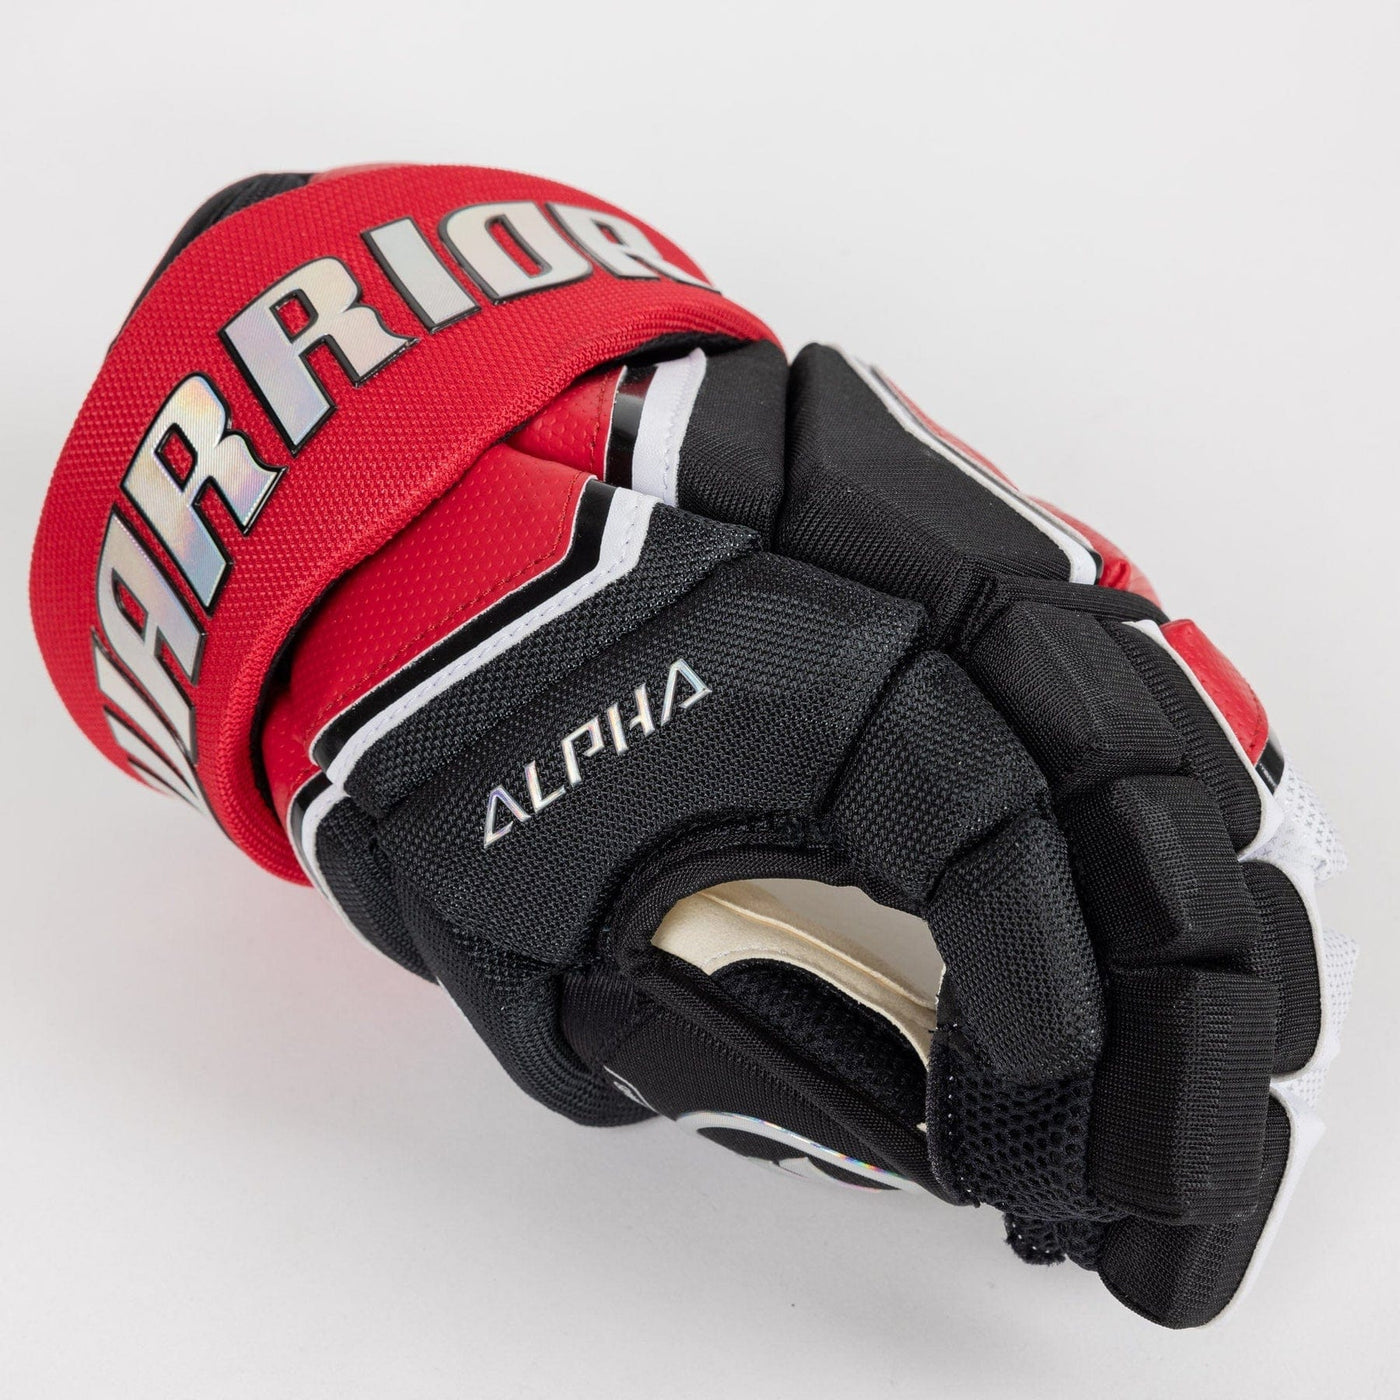 Warrior Alpha LX2 Pro Junior Hockey Glove - The Hockey Shop Source For Sports